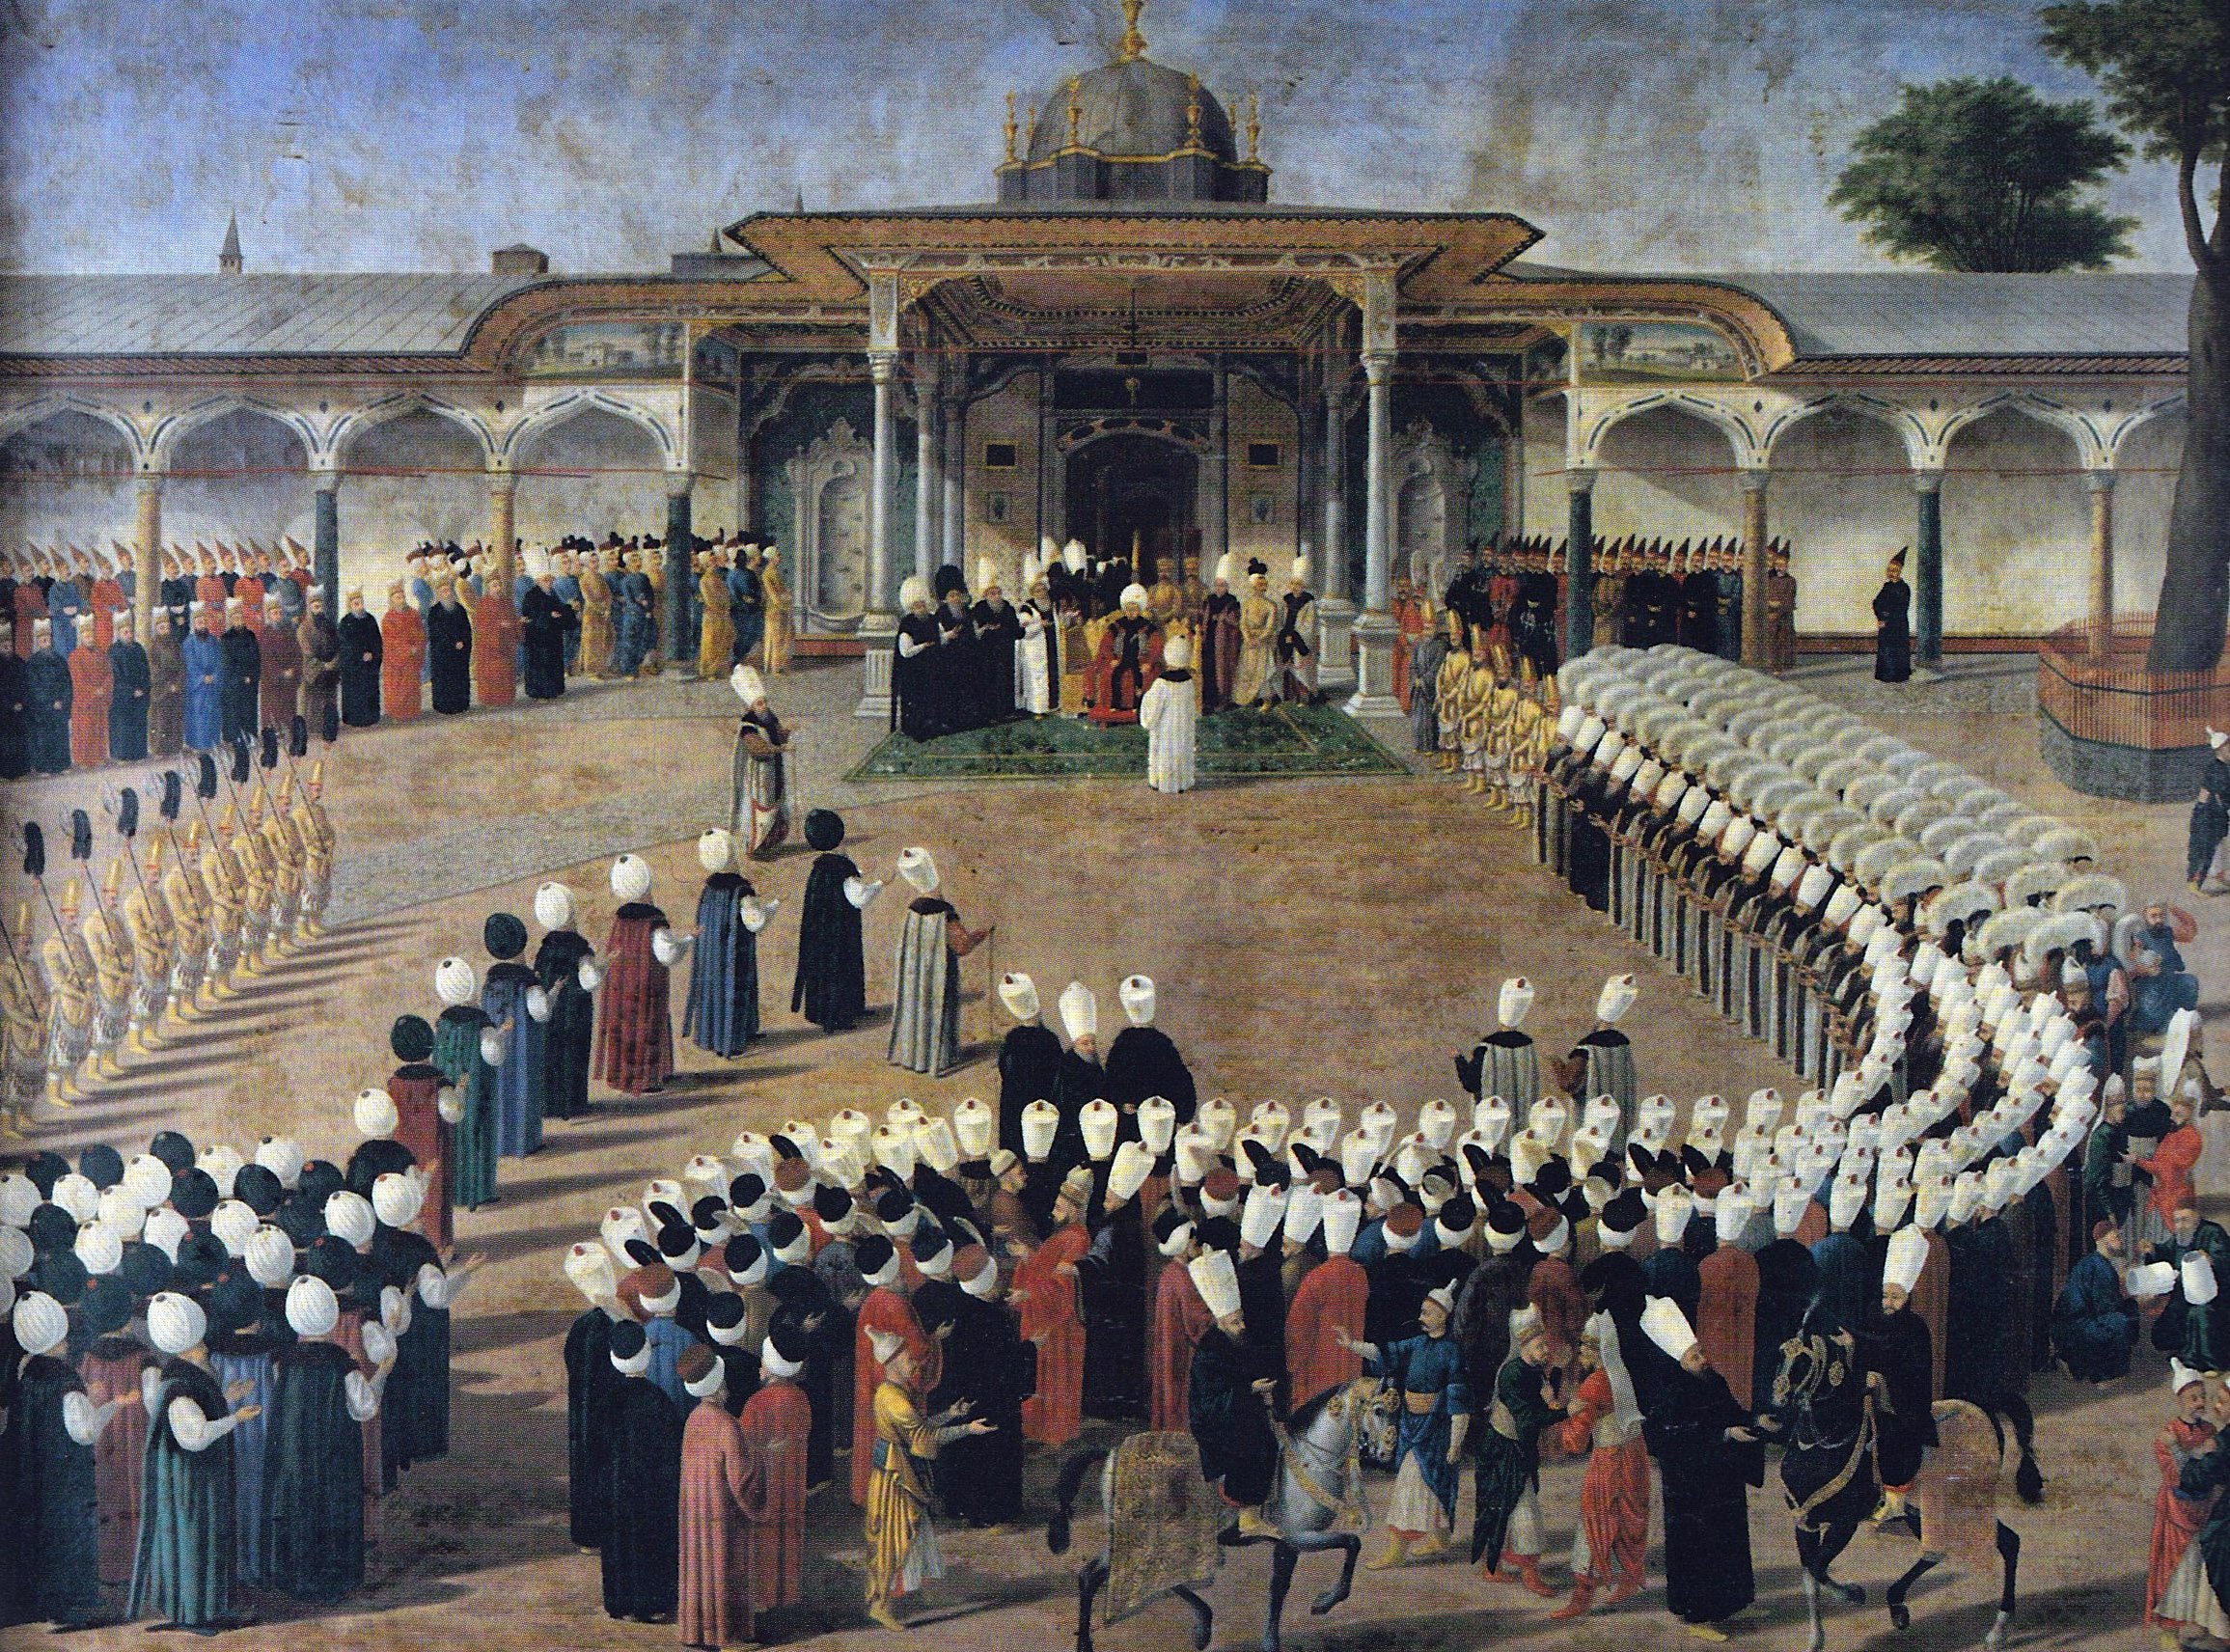 March 22: Ottoman History Workshop